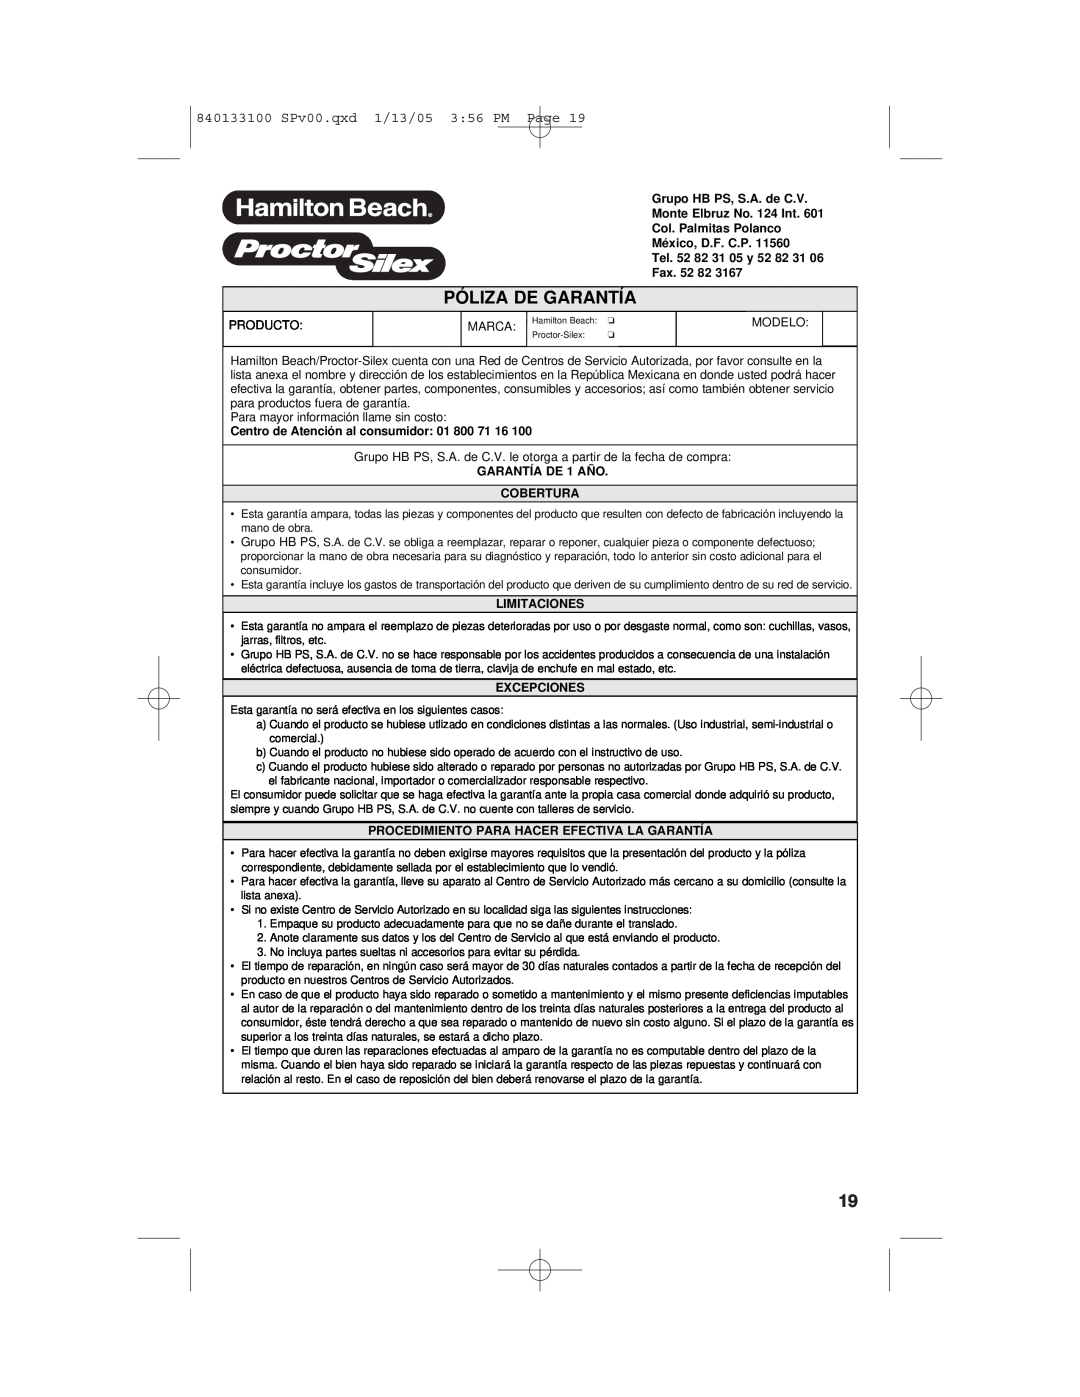 Hamilton Beach HEPA manual Póliza De Garantía, 840133100 SPv00.qxd 1/13/05 3 56 PM Page, Grupo HB PS, S.A. de C.V, Fax 